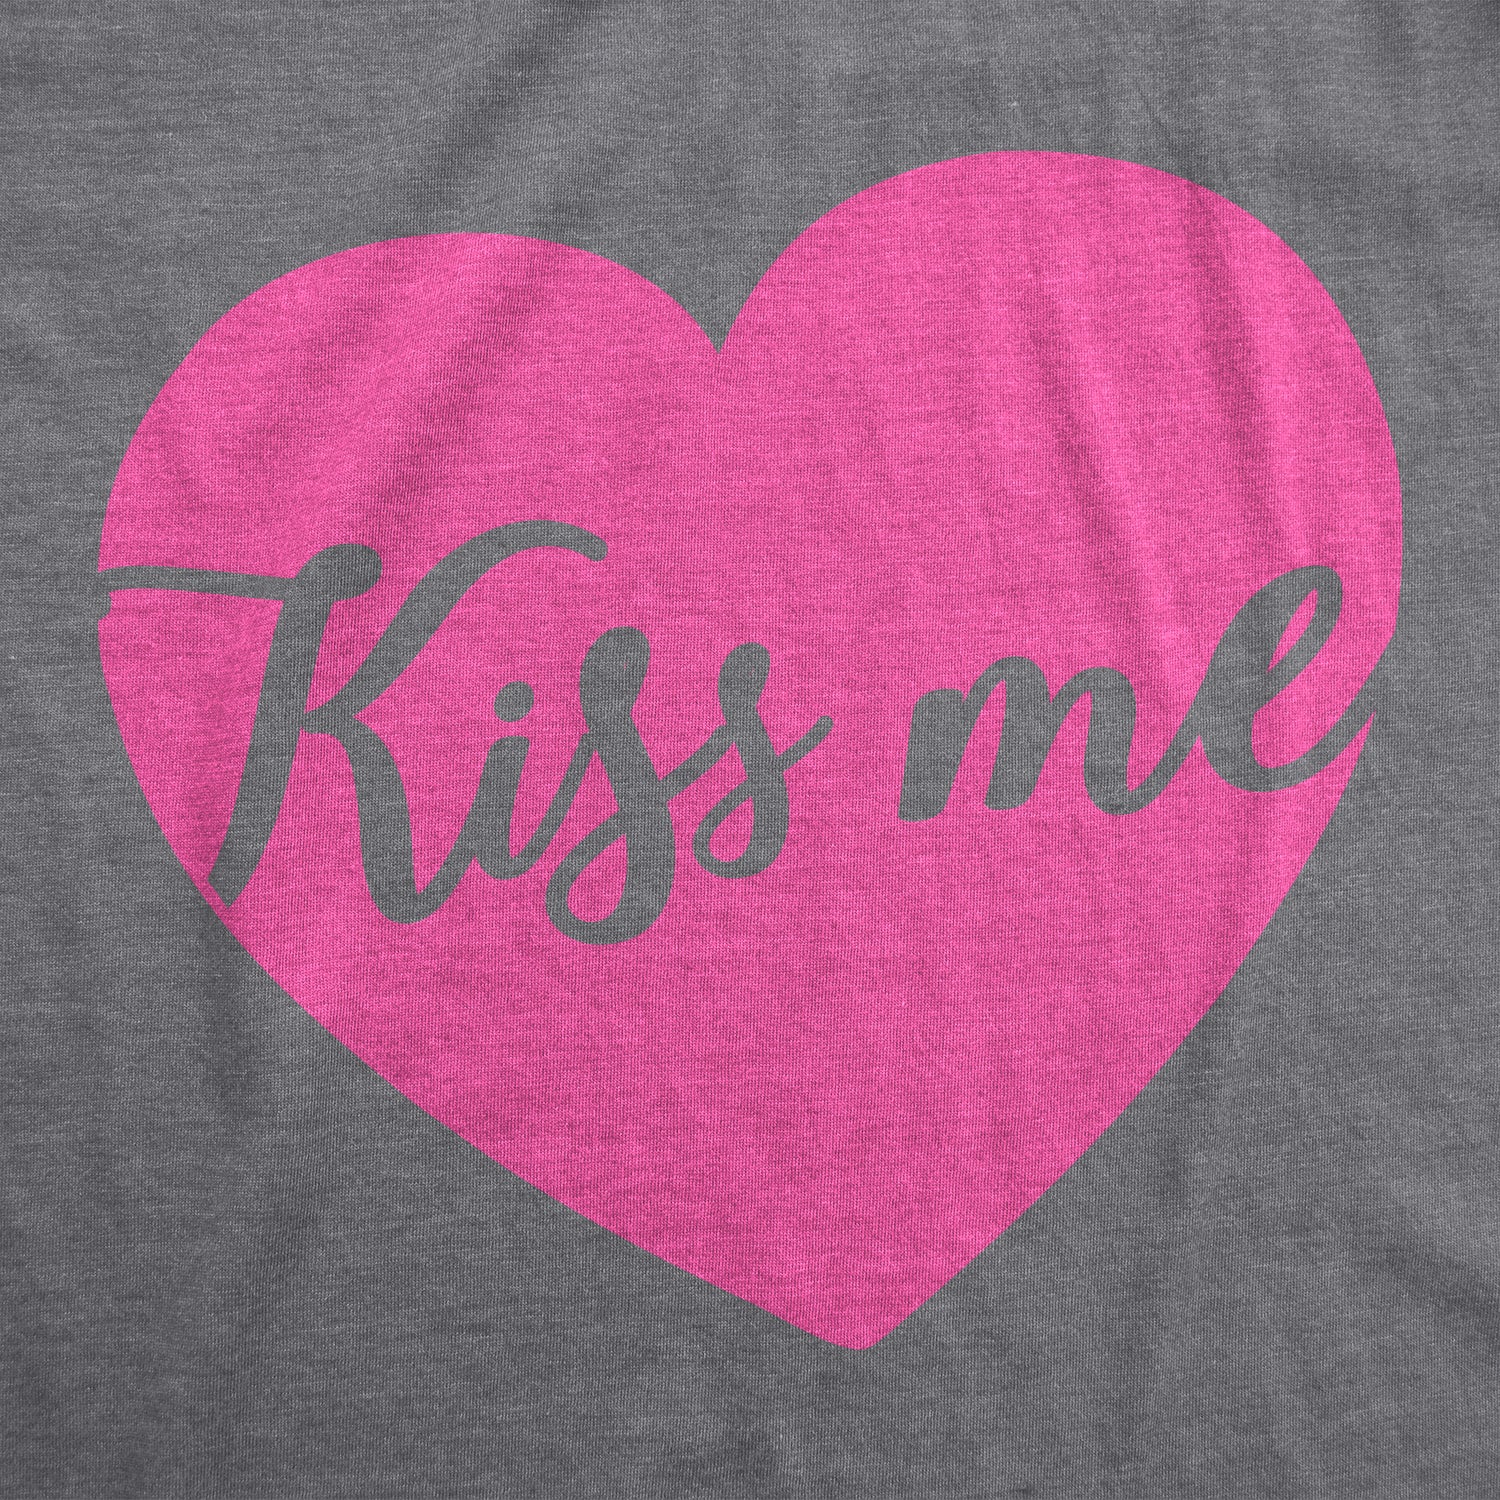 Funny Dark Heather Grey - Kiss Me Kiss Me Script Heart Womens T Shirt Nerdy Valentine's Day Tee